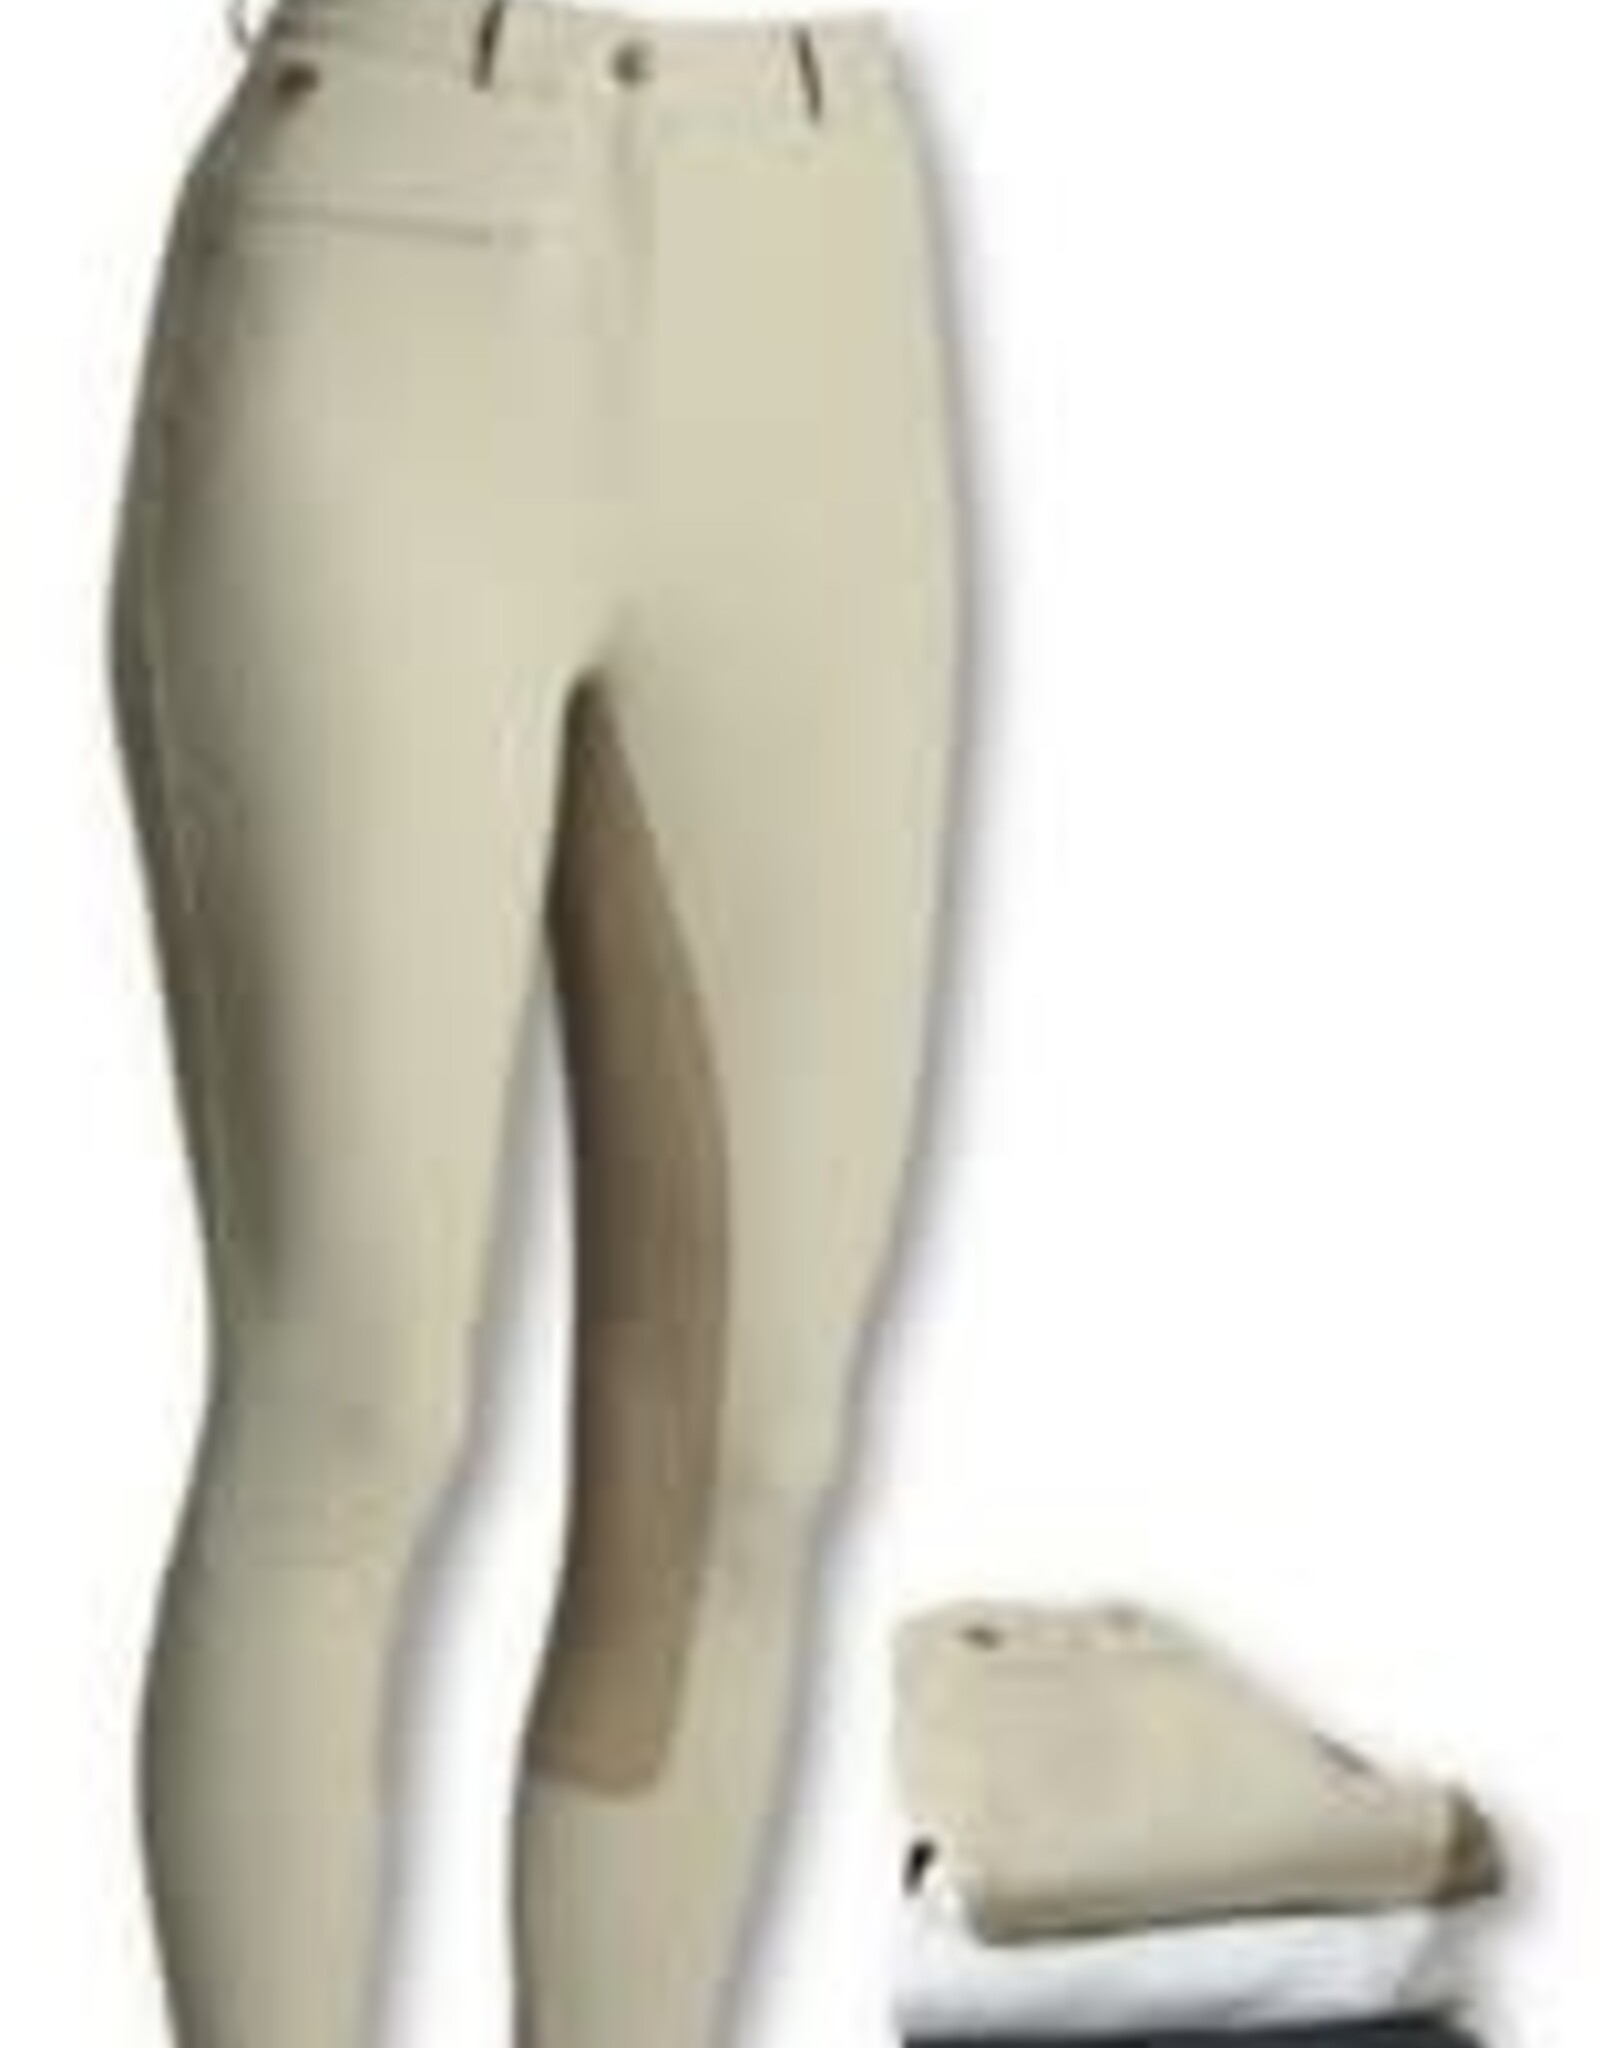 Ariat Ariat Sport Rhythm Breeches - WHITE - Size 34 Long